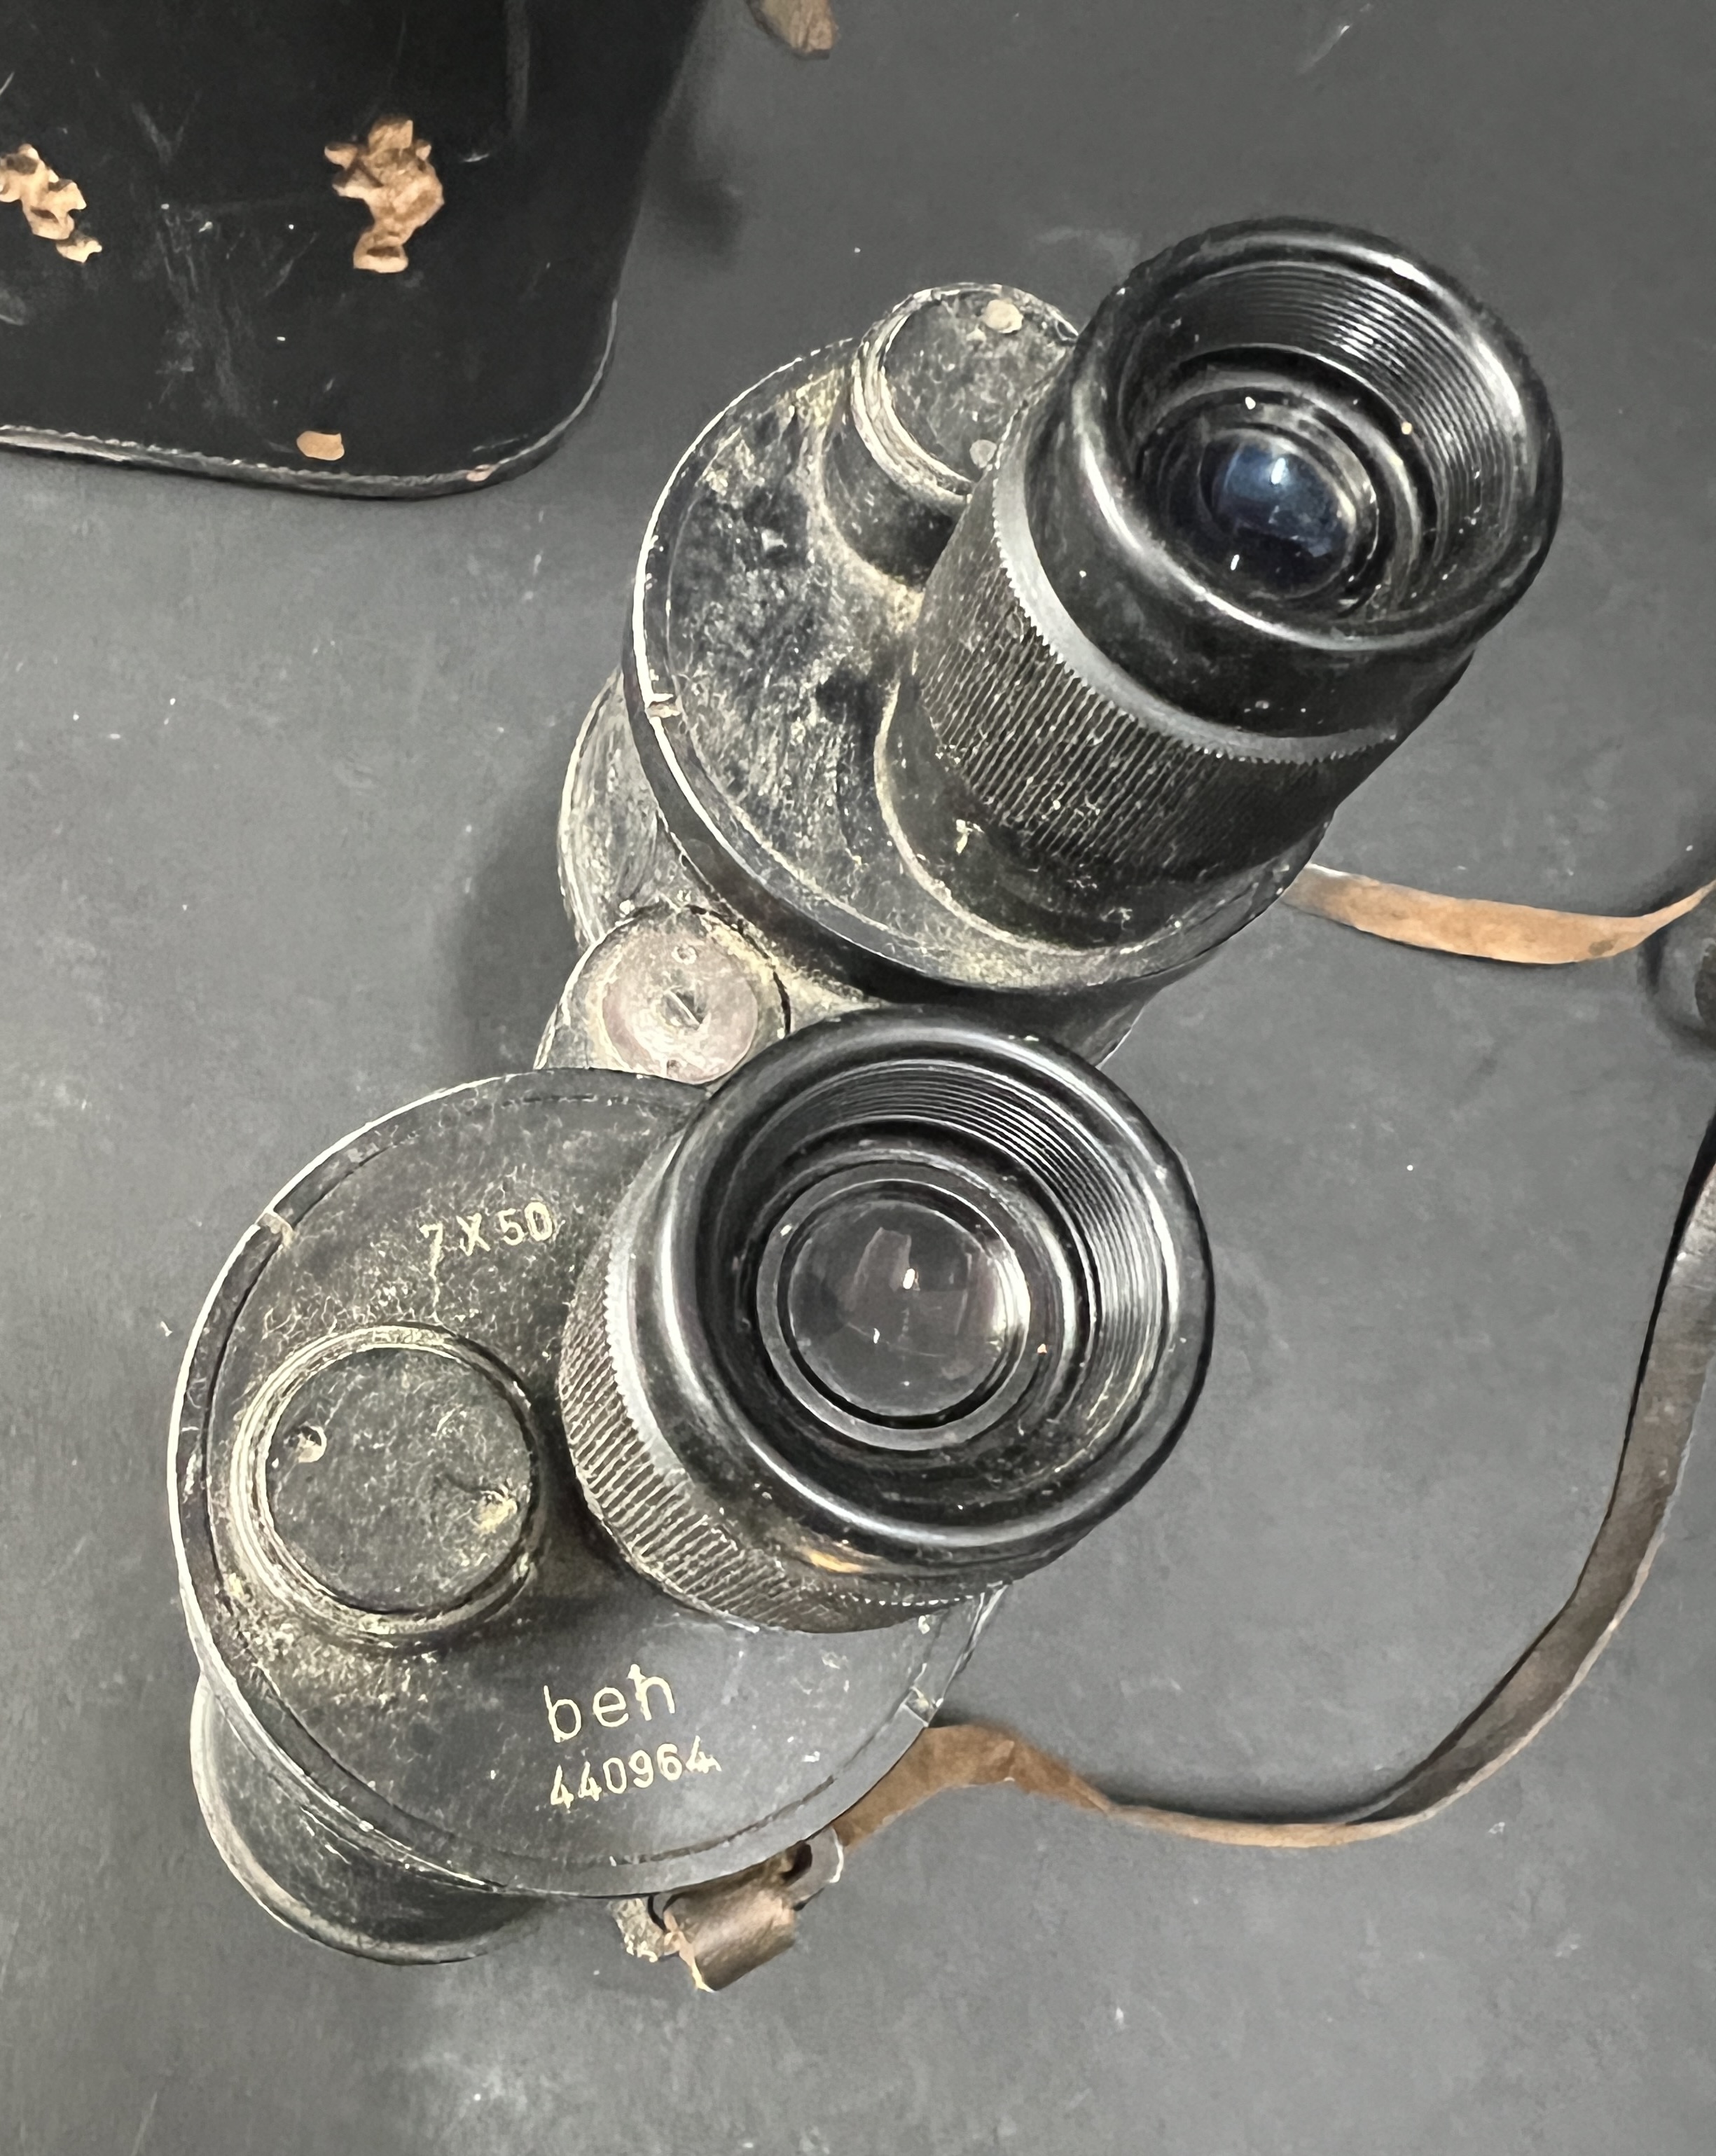 A pair of Kriegsmarine binoculars, marked beh 440964, Artl. 1938, 7 x 50, E.Leitz Wetzlar, cased. - Image 2 of 5